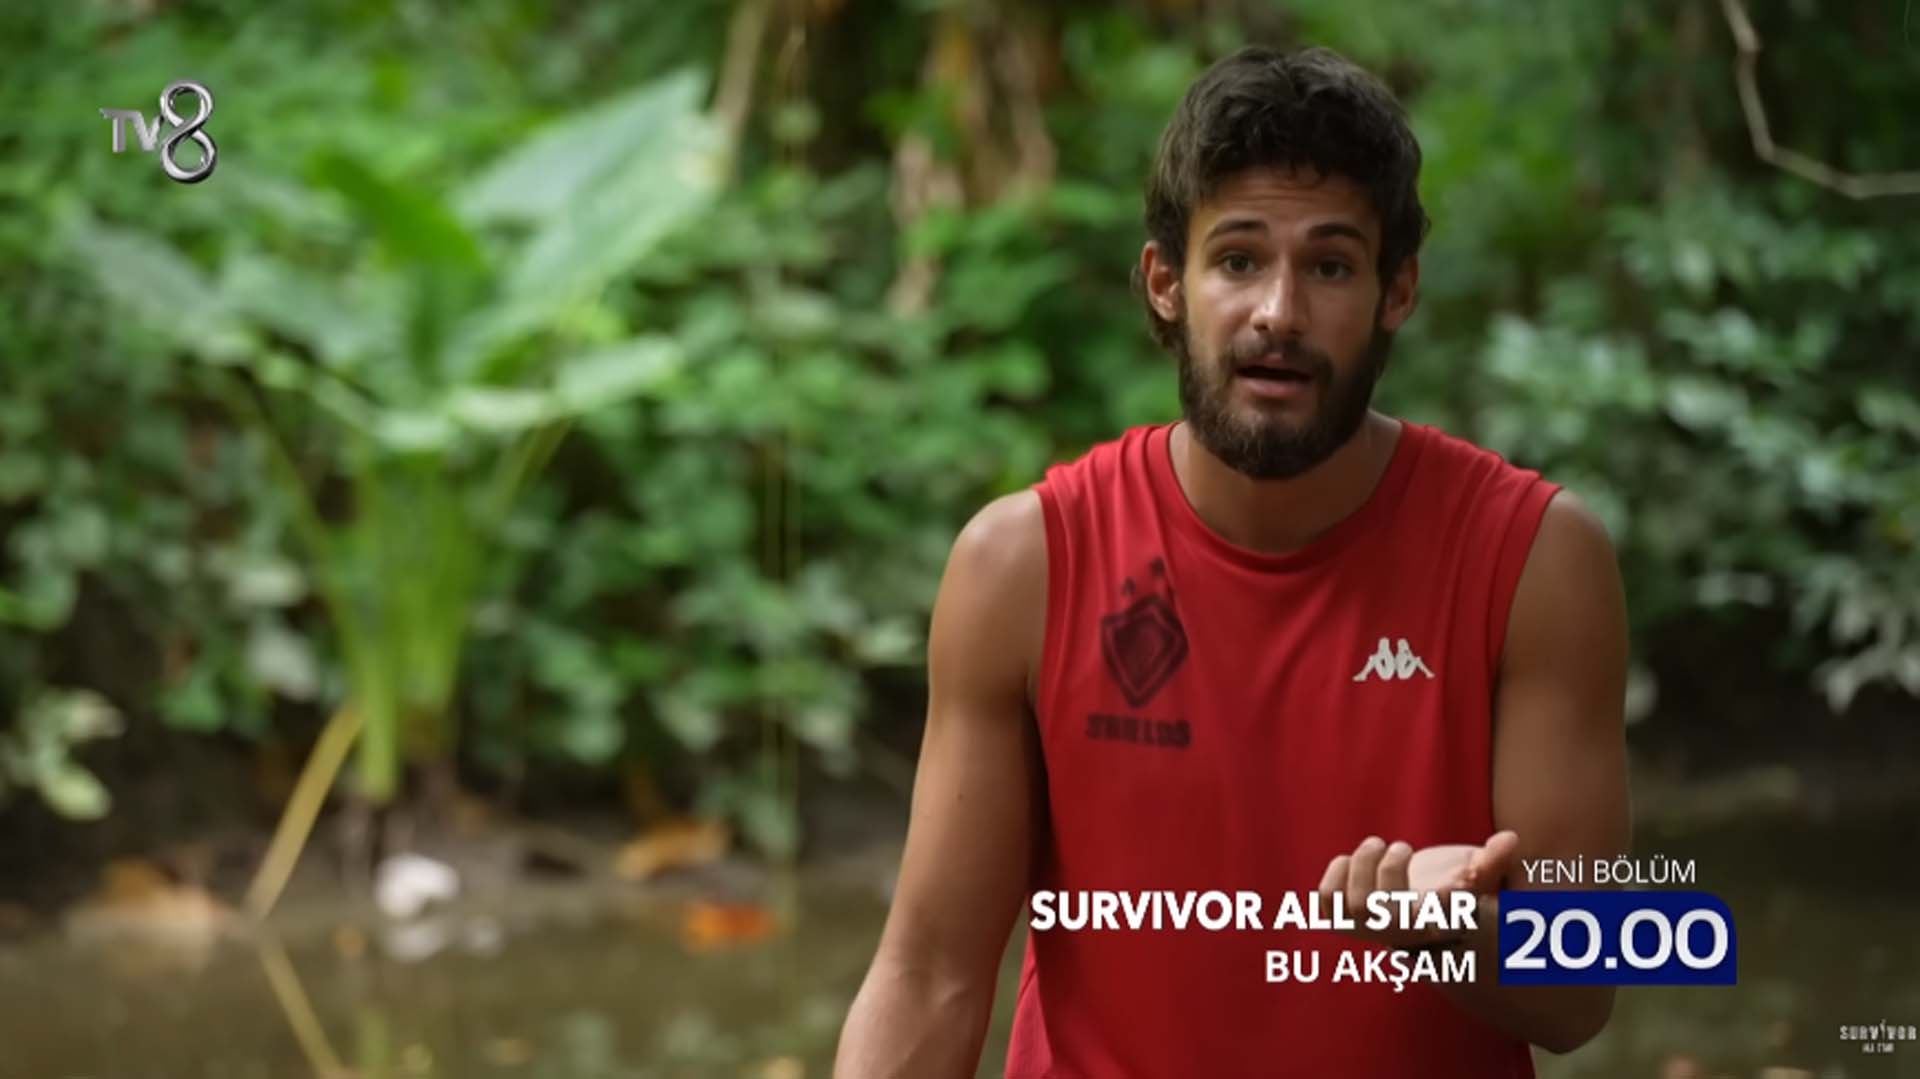 TV8 Survivor All Star 147. bölüm full, tek parça izle | Survivor All Star son bölüm izle Youtube